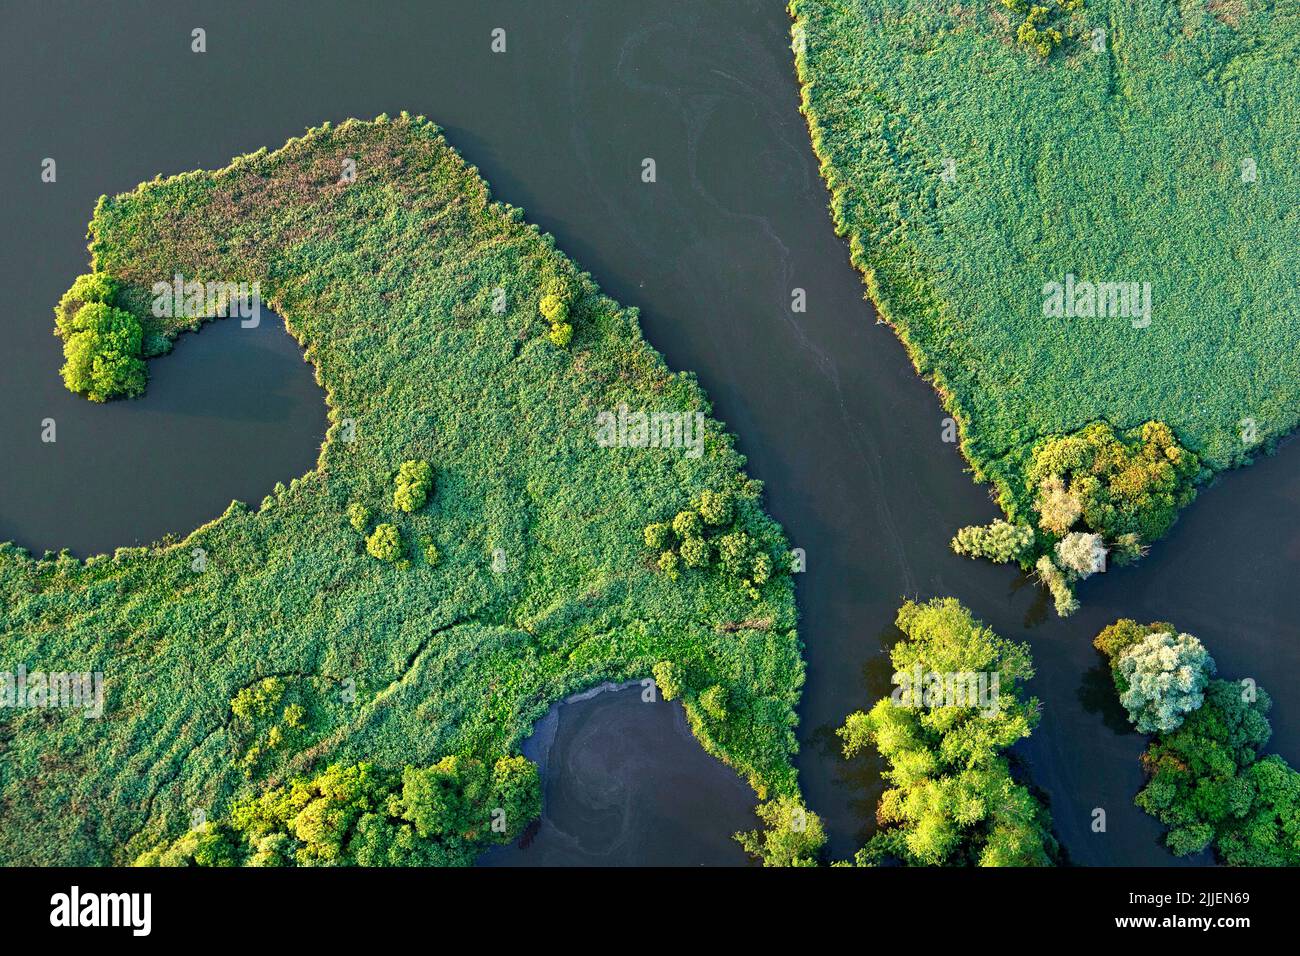 Ysel river scenery, aerial view, Belgium, Flanders Stock Photo